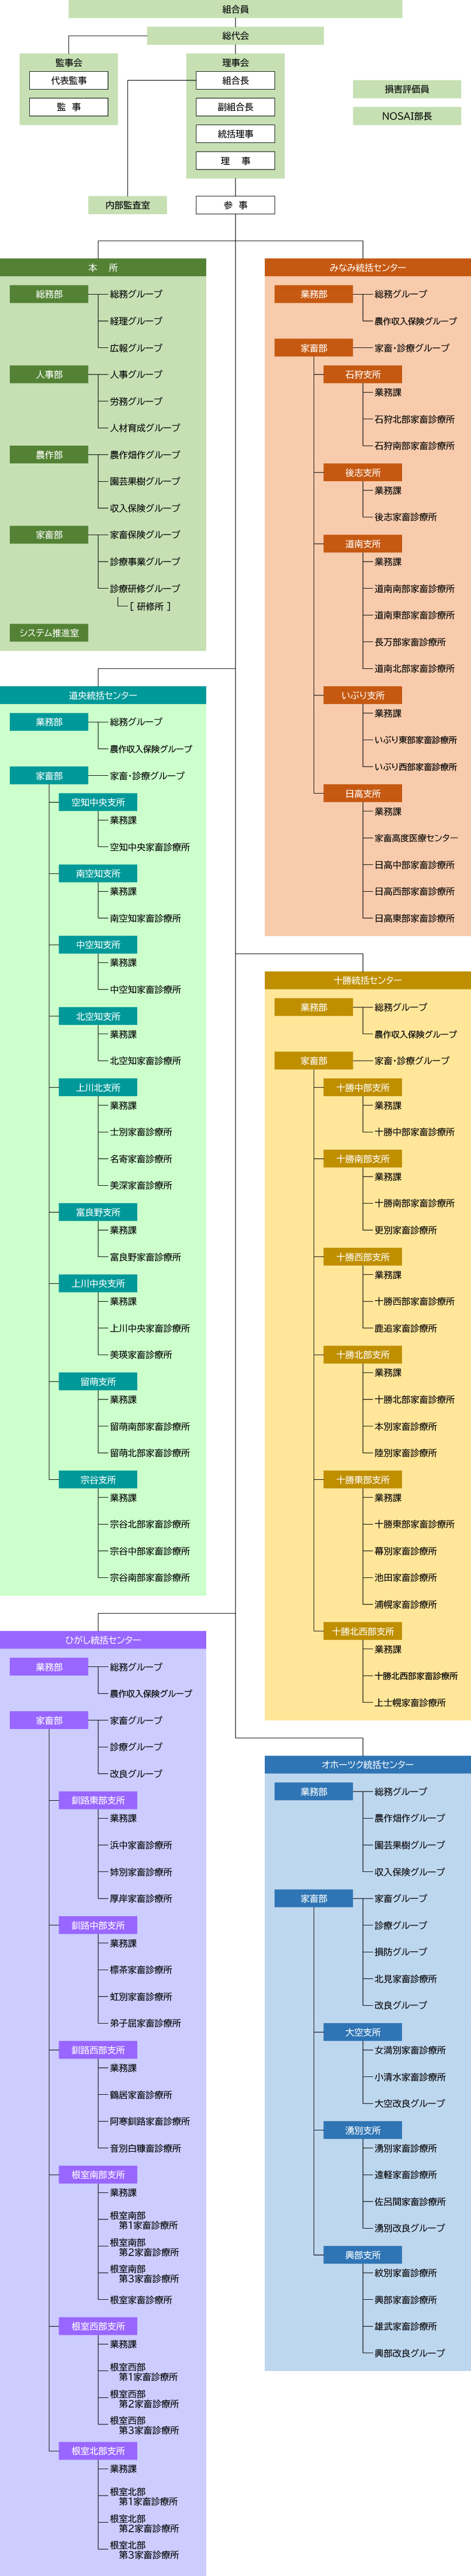 NOSAI北海道 機構図